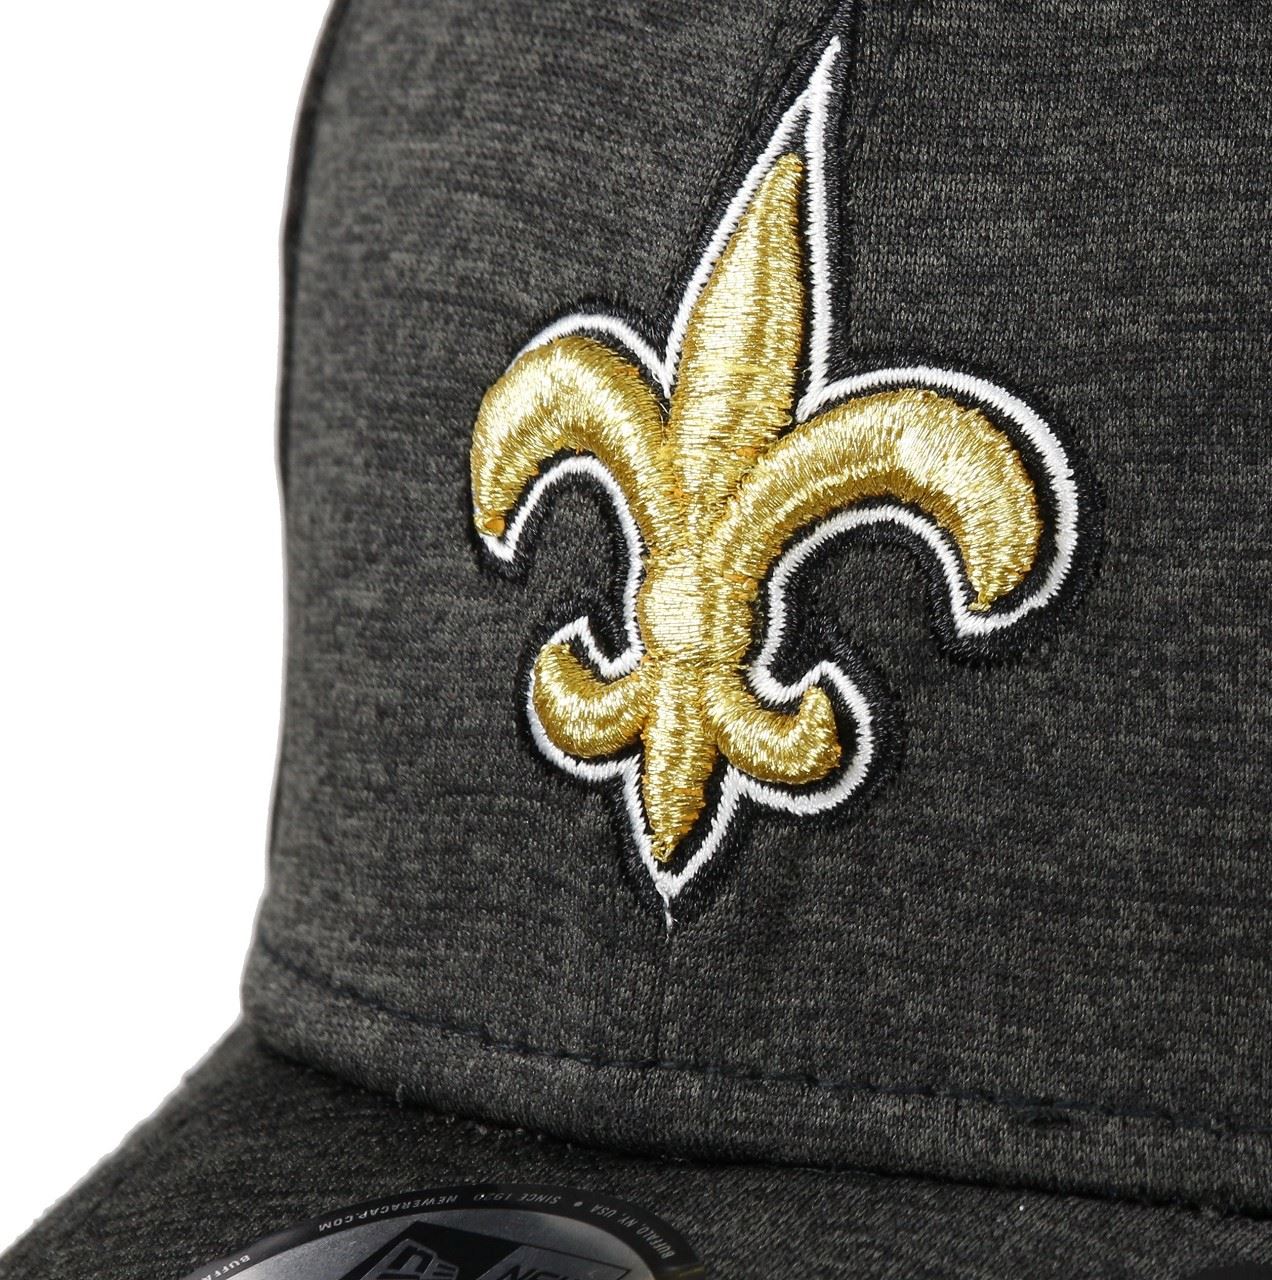 New Orleans Saints NFL Saints Black 39Thirty Stretch Cap New Era